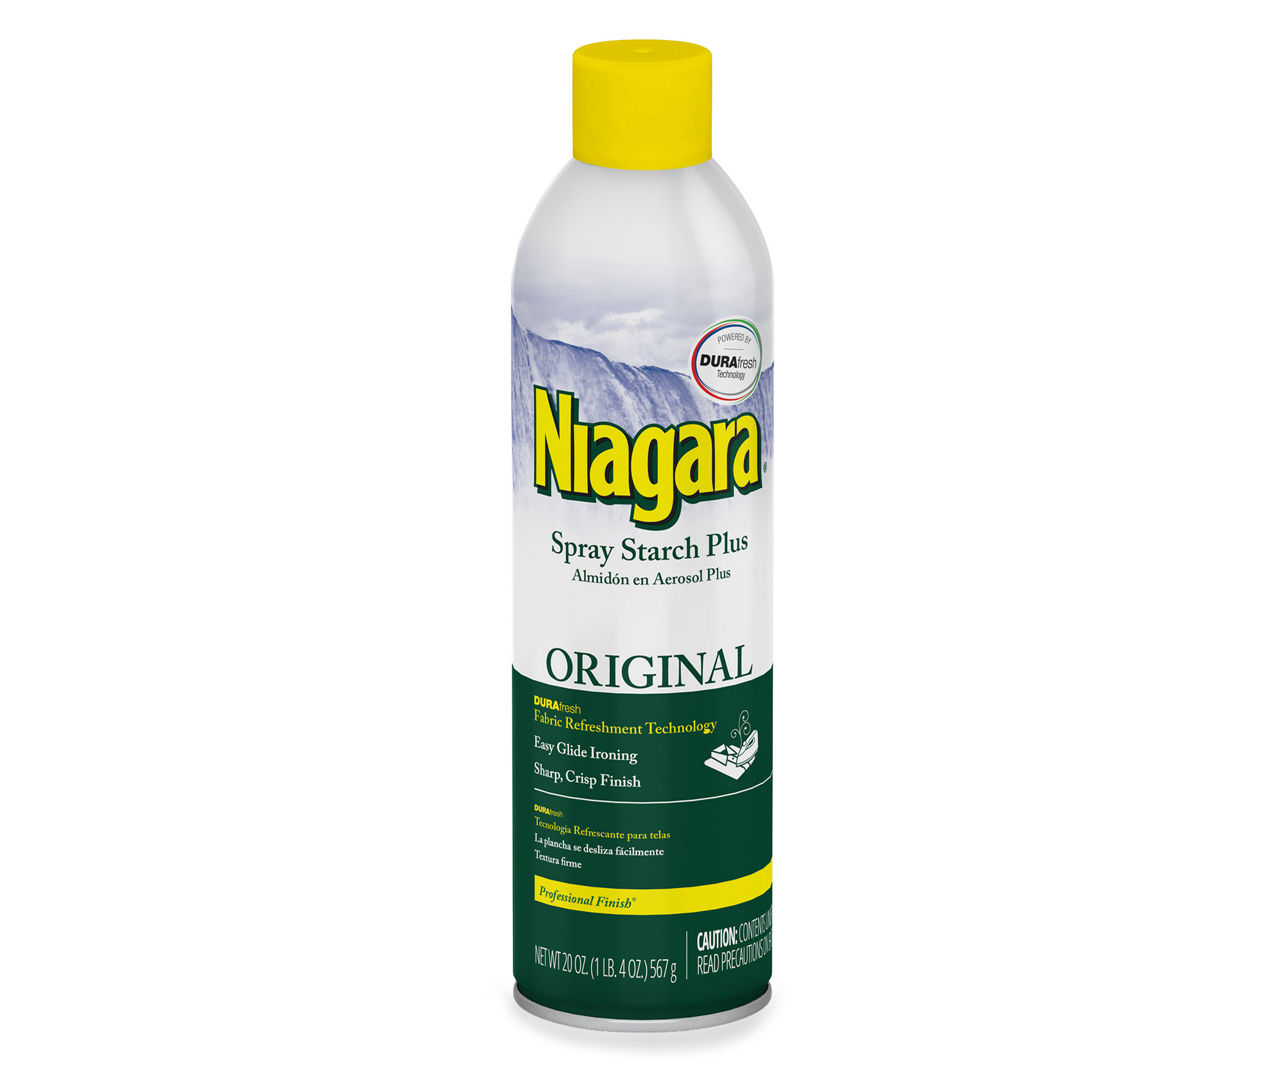 Niagara Spray Starch